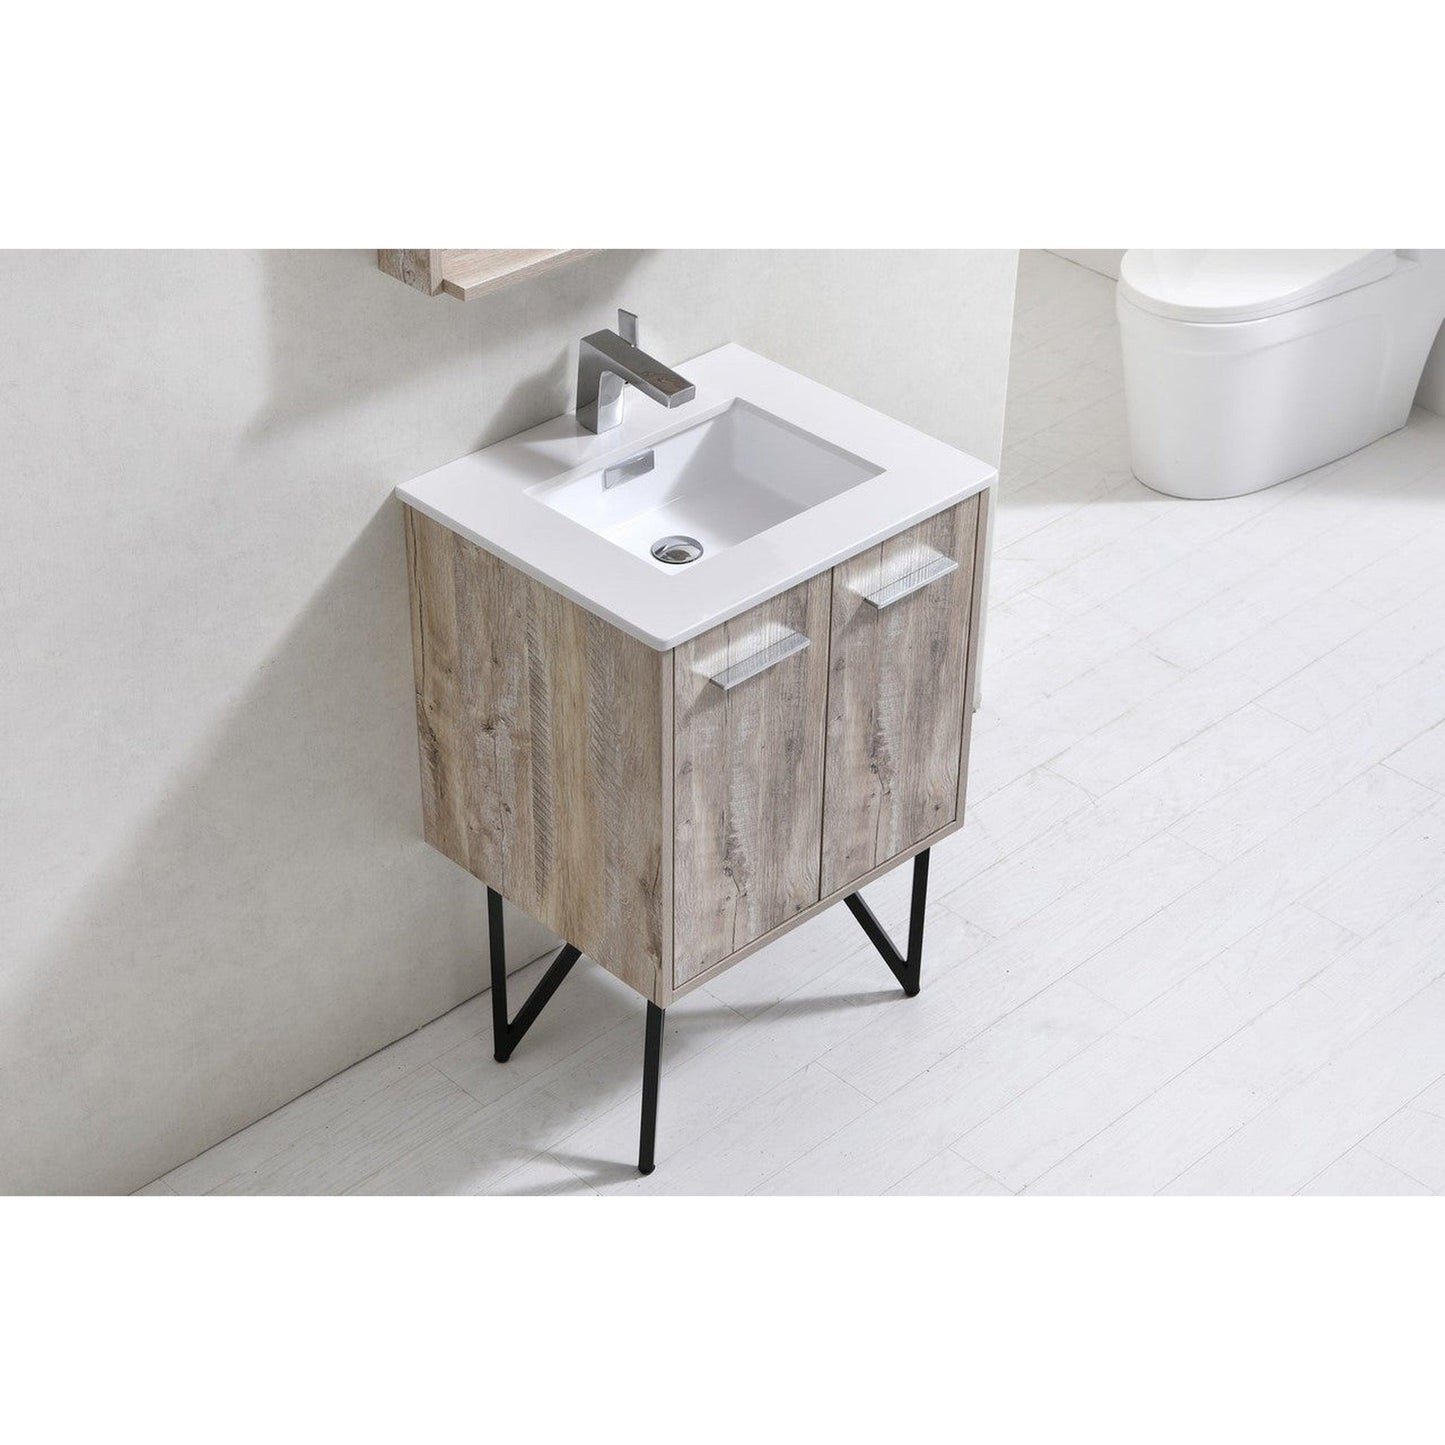 KubeBath Bosco 24" Nature Wood Modern Freestanding Bathroom Vanity With Single Undermount Sink With Overflow